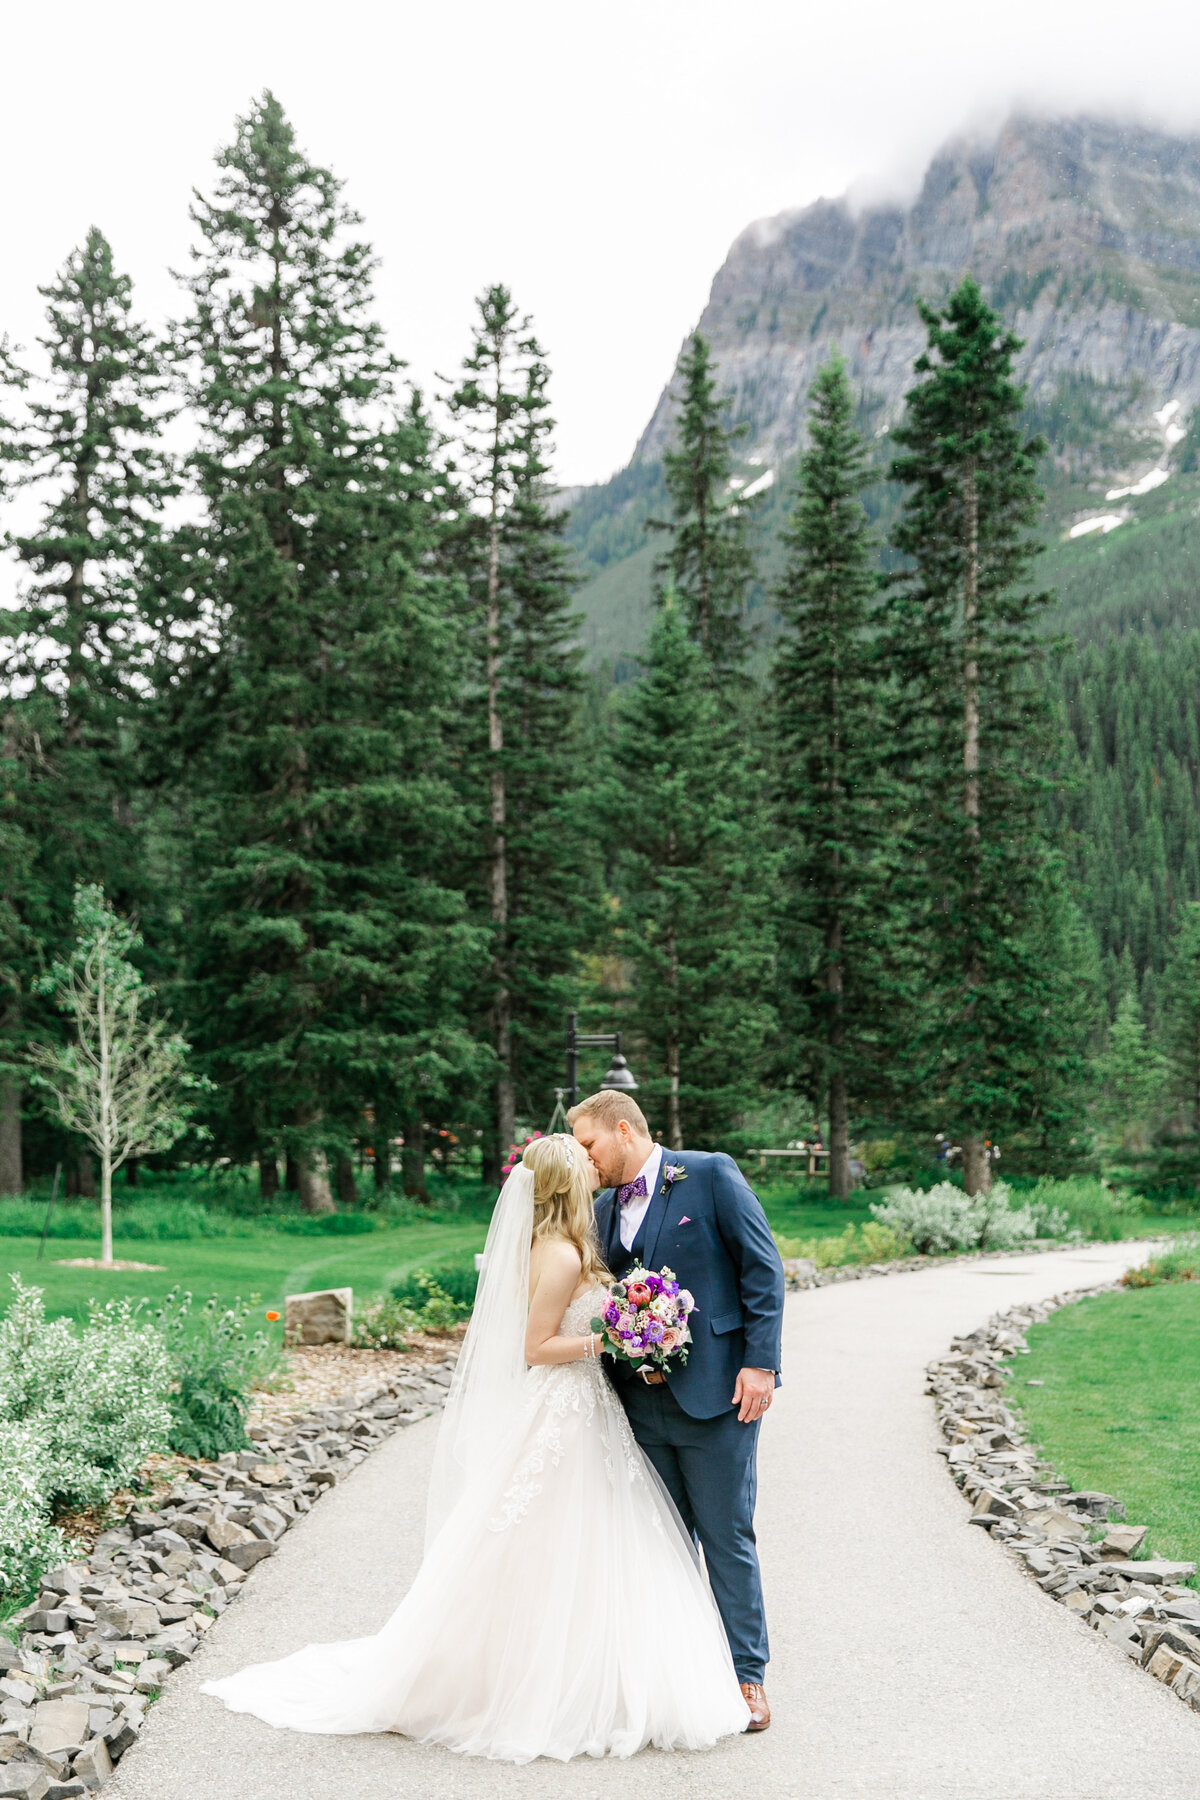 Karlie Colleen Photography - Fairmont Chateau Lake Louise Wedding - Banff Canada - Sara & Drew Forsberg-986